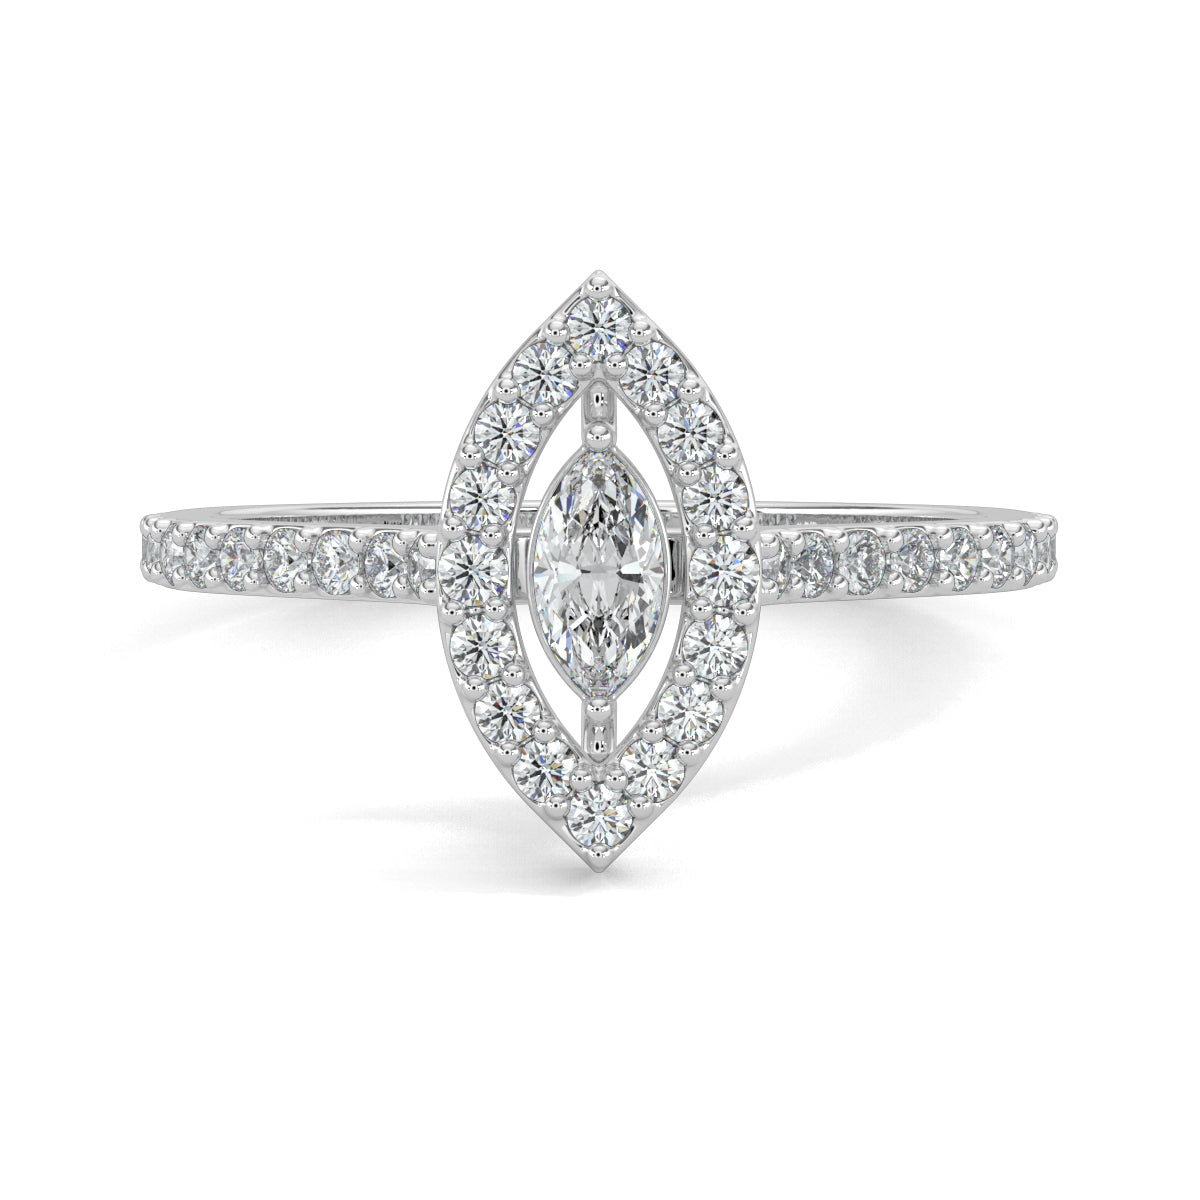 White Gold, Diamond Ring, natural diamond ring, lab-grown diamond ring, Glamourous marquise diamond ring, halo setting, pave-set diamonds, everyday jewelry, marquise shape diamond, sparkling diamond ring